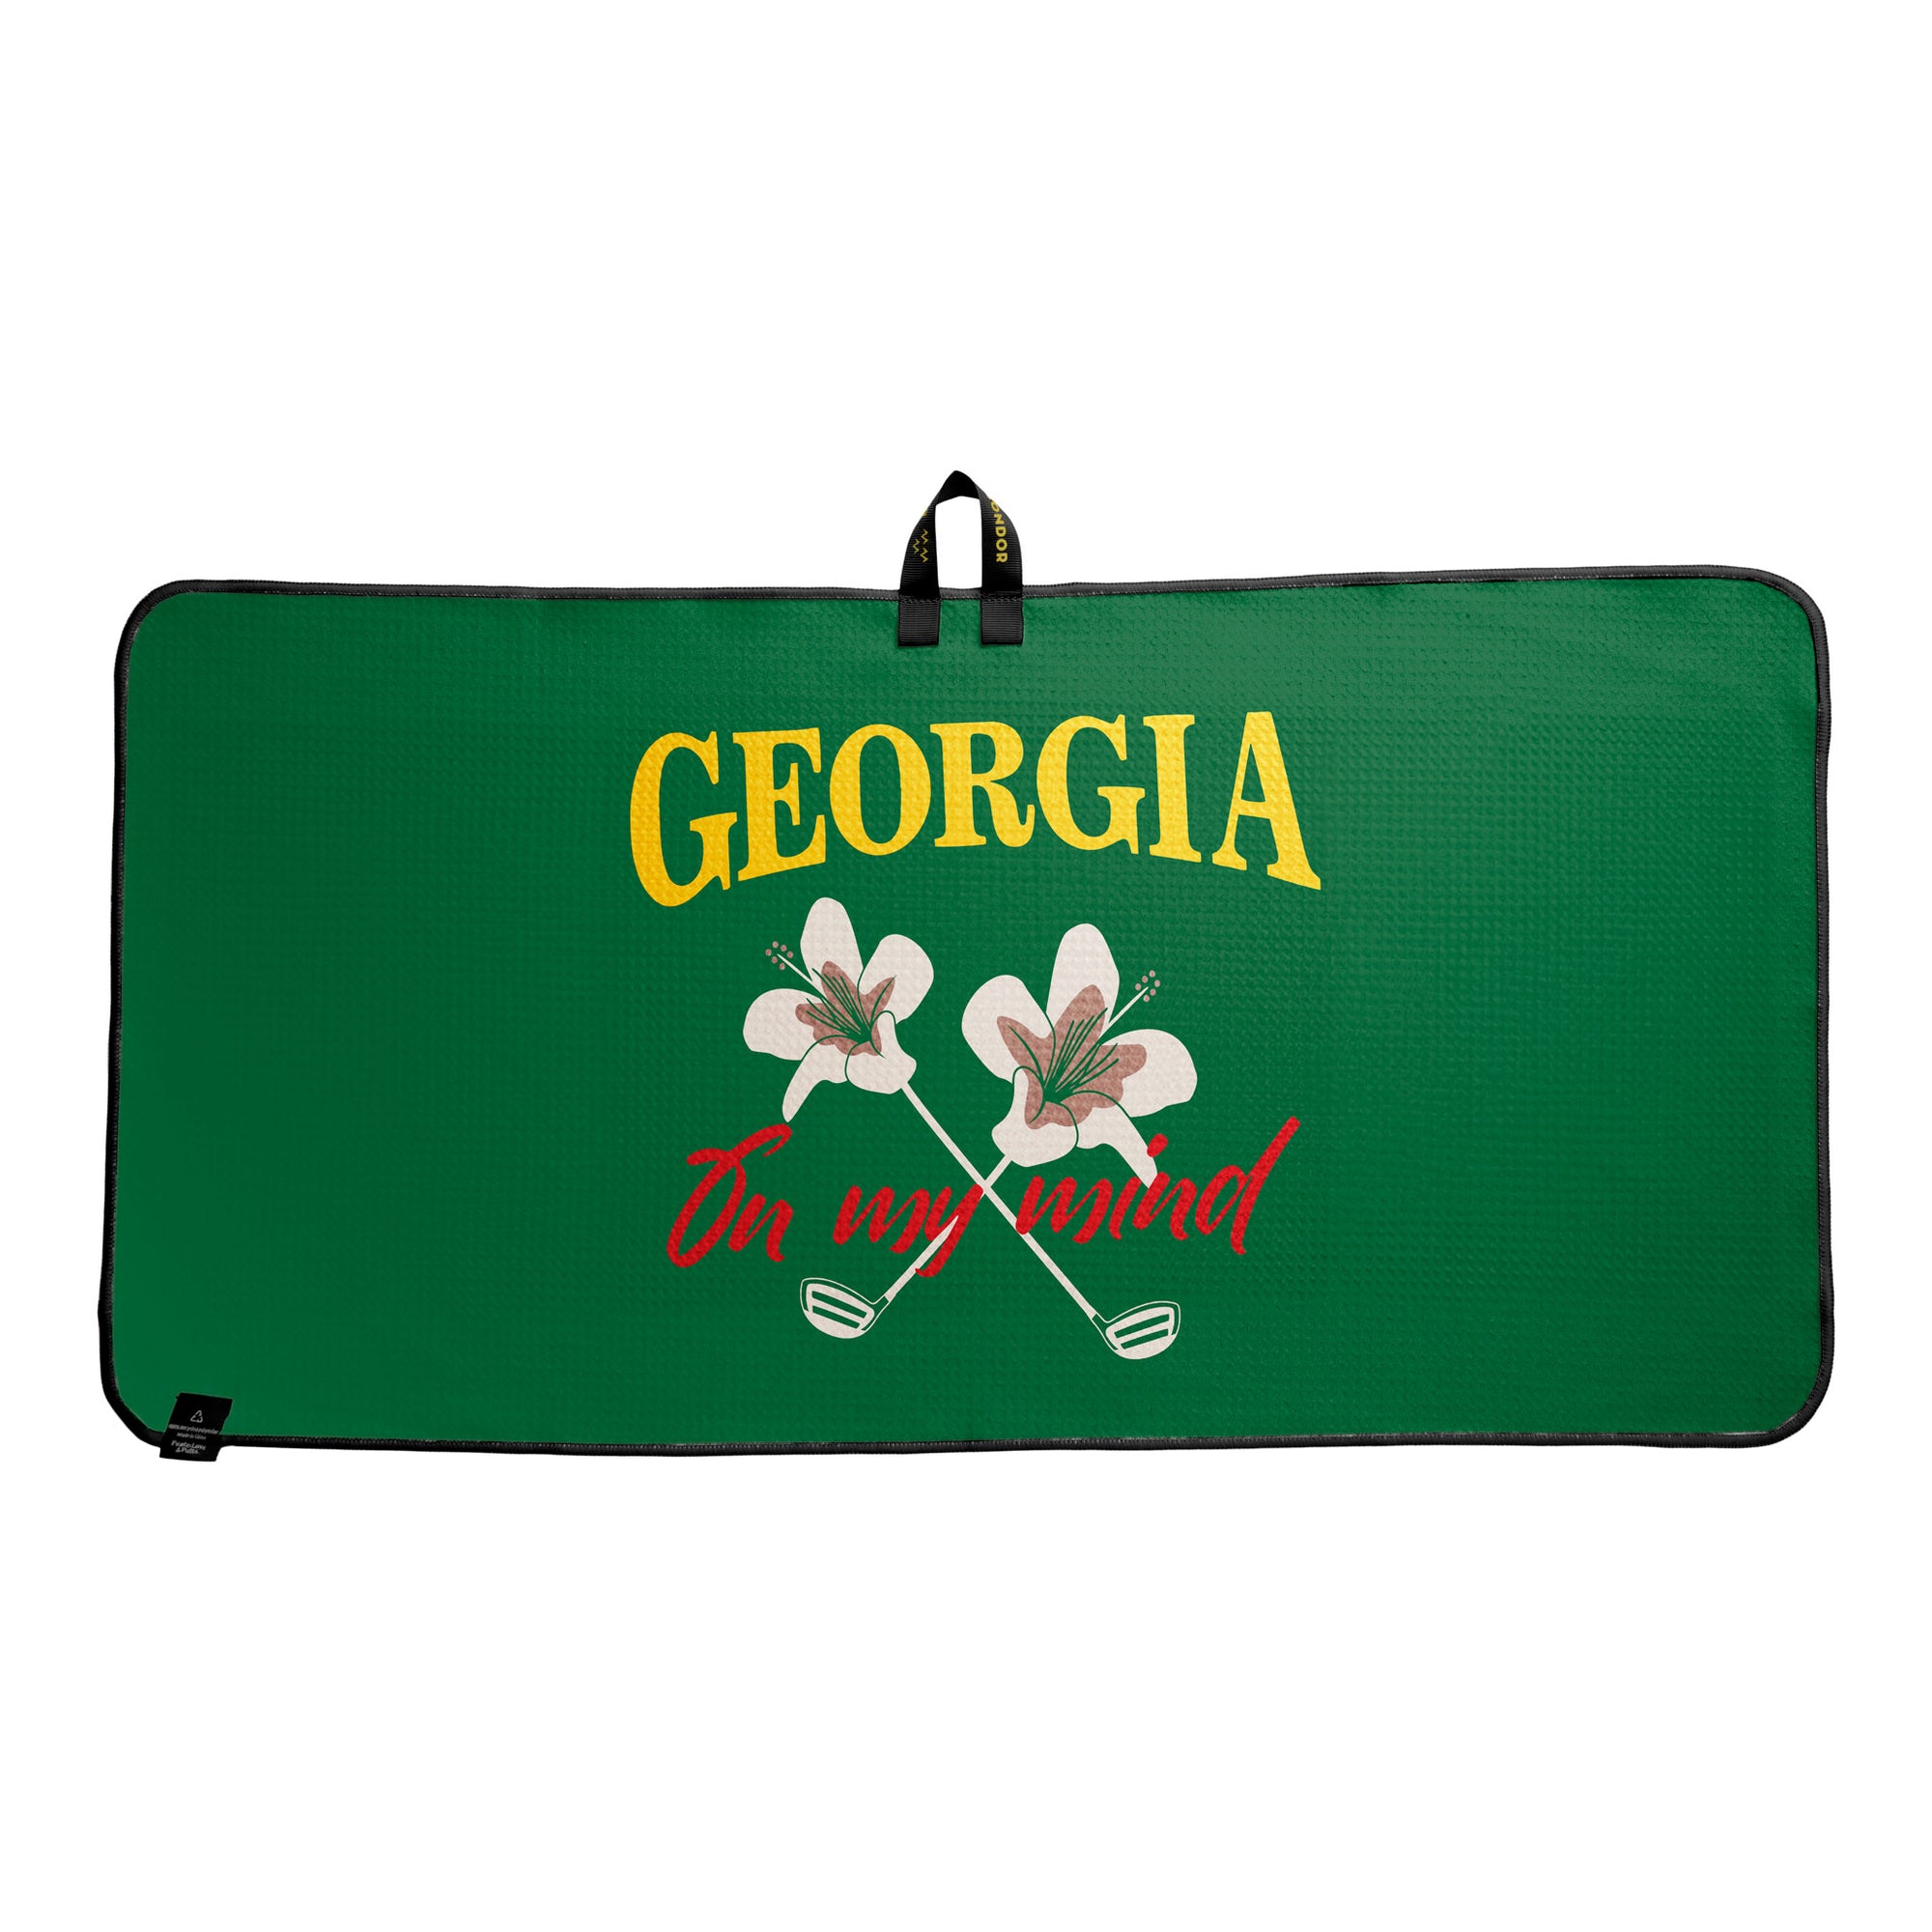 Georgia Golf Towel